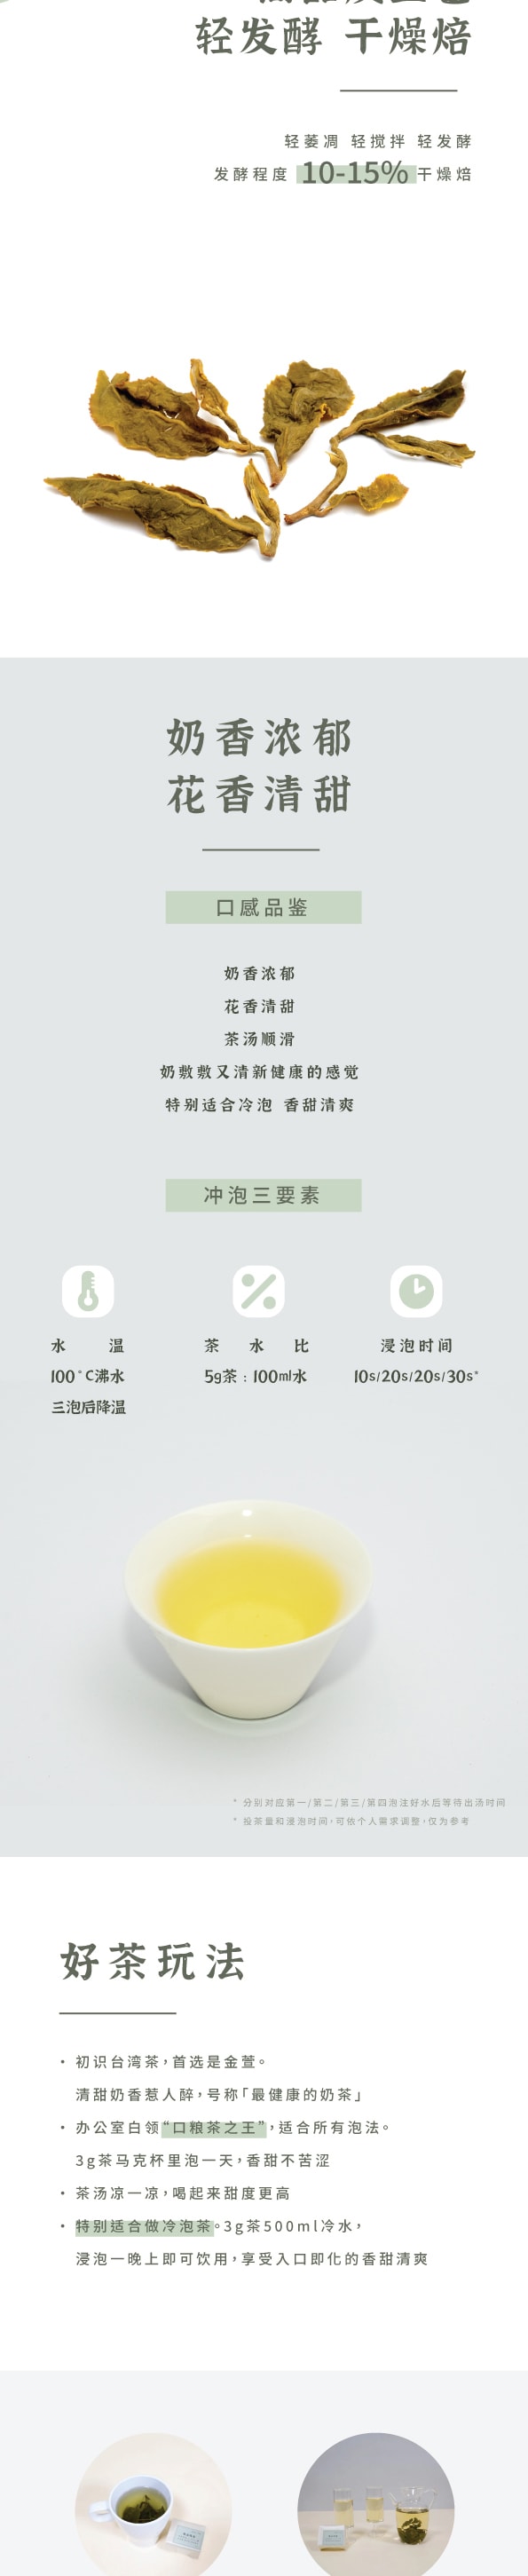 ZhaoTea 台湾乌龙茶金萱 清甜奶香 口感顺滑 大受欢迎的台湾乌龙茶 茶叶 乌龙茶 60g